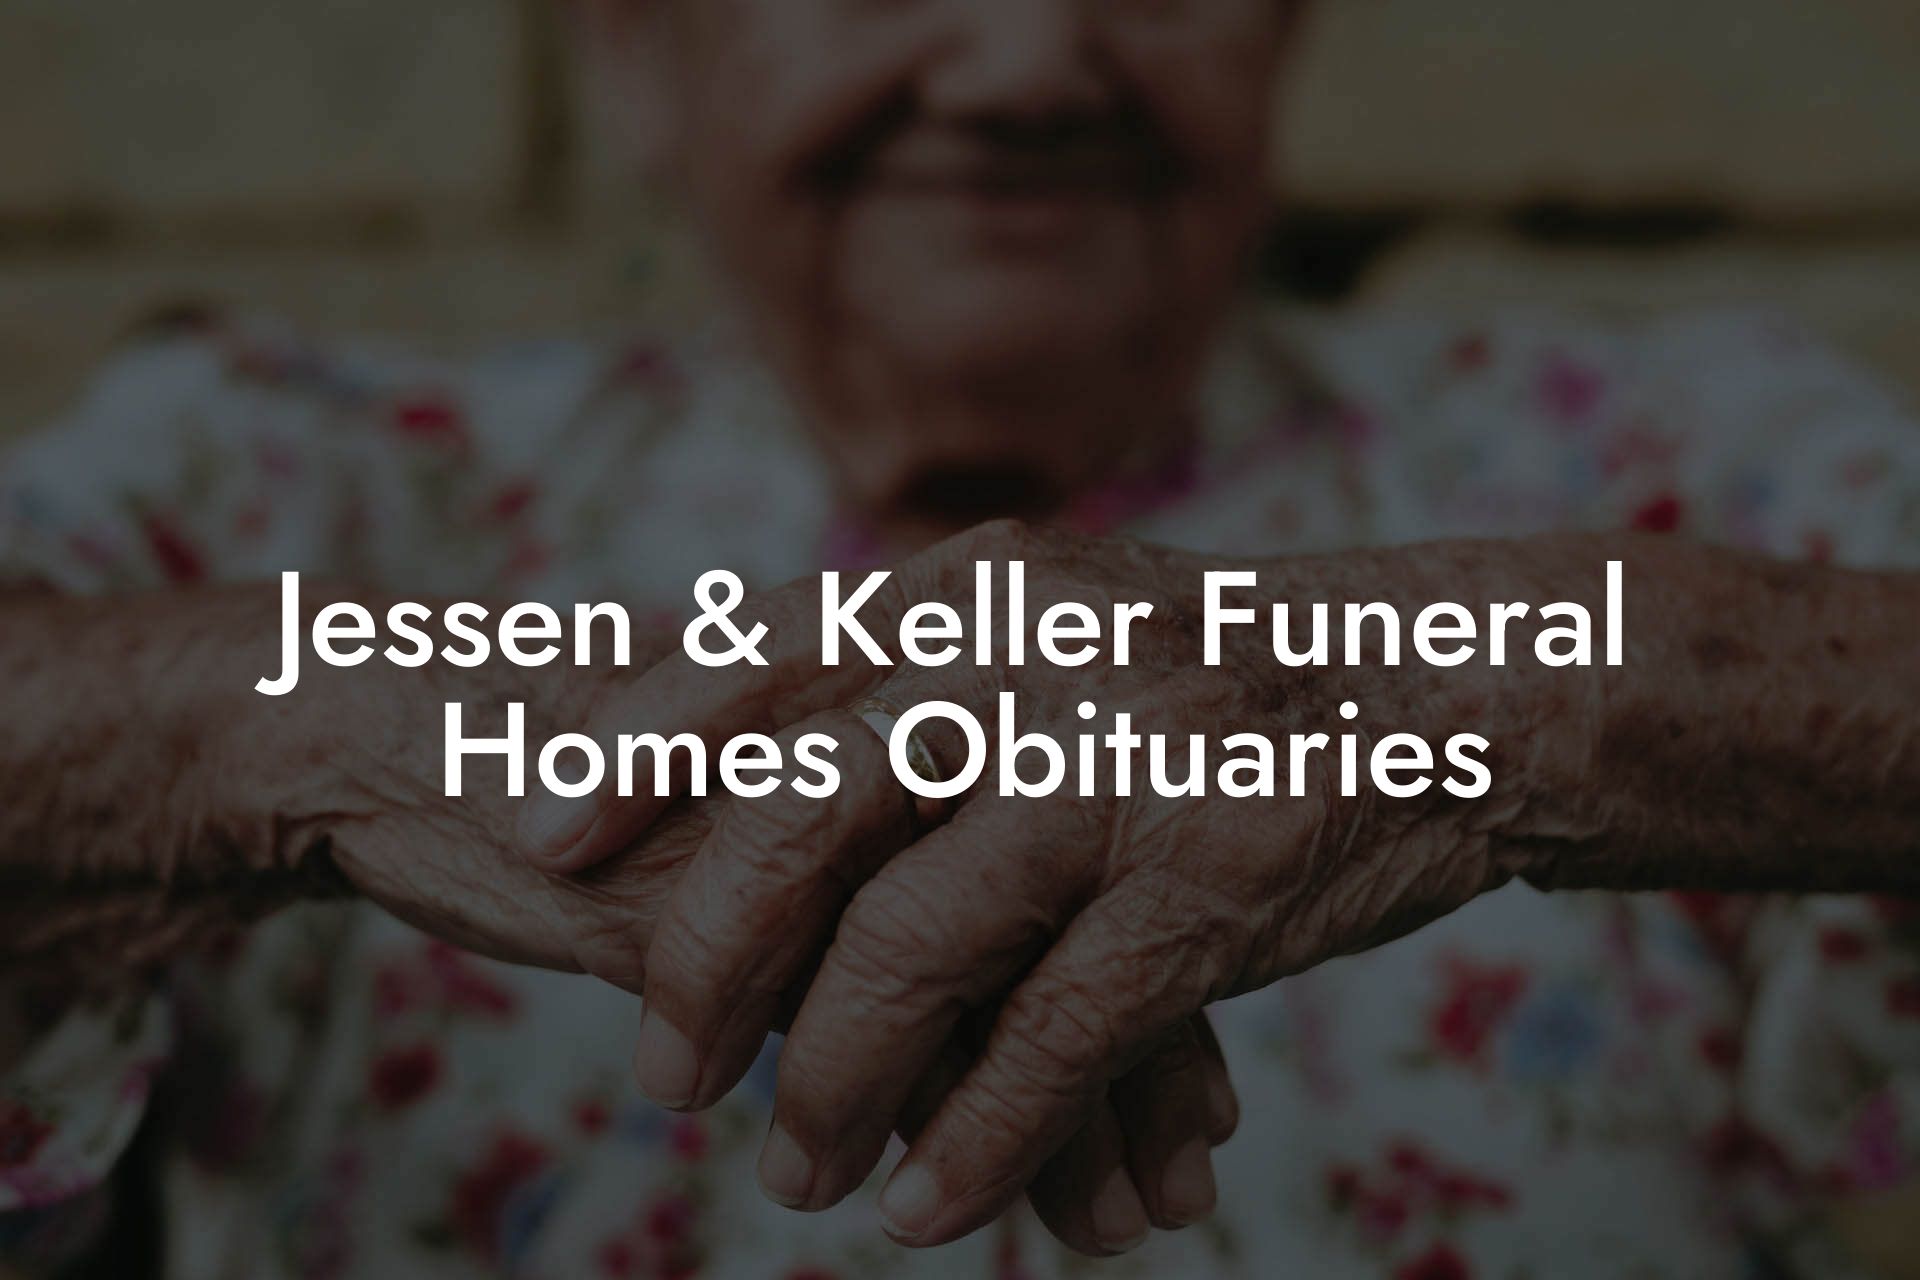 Jessen & Keller Funeral Homes Obituaries